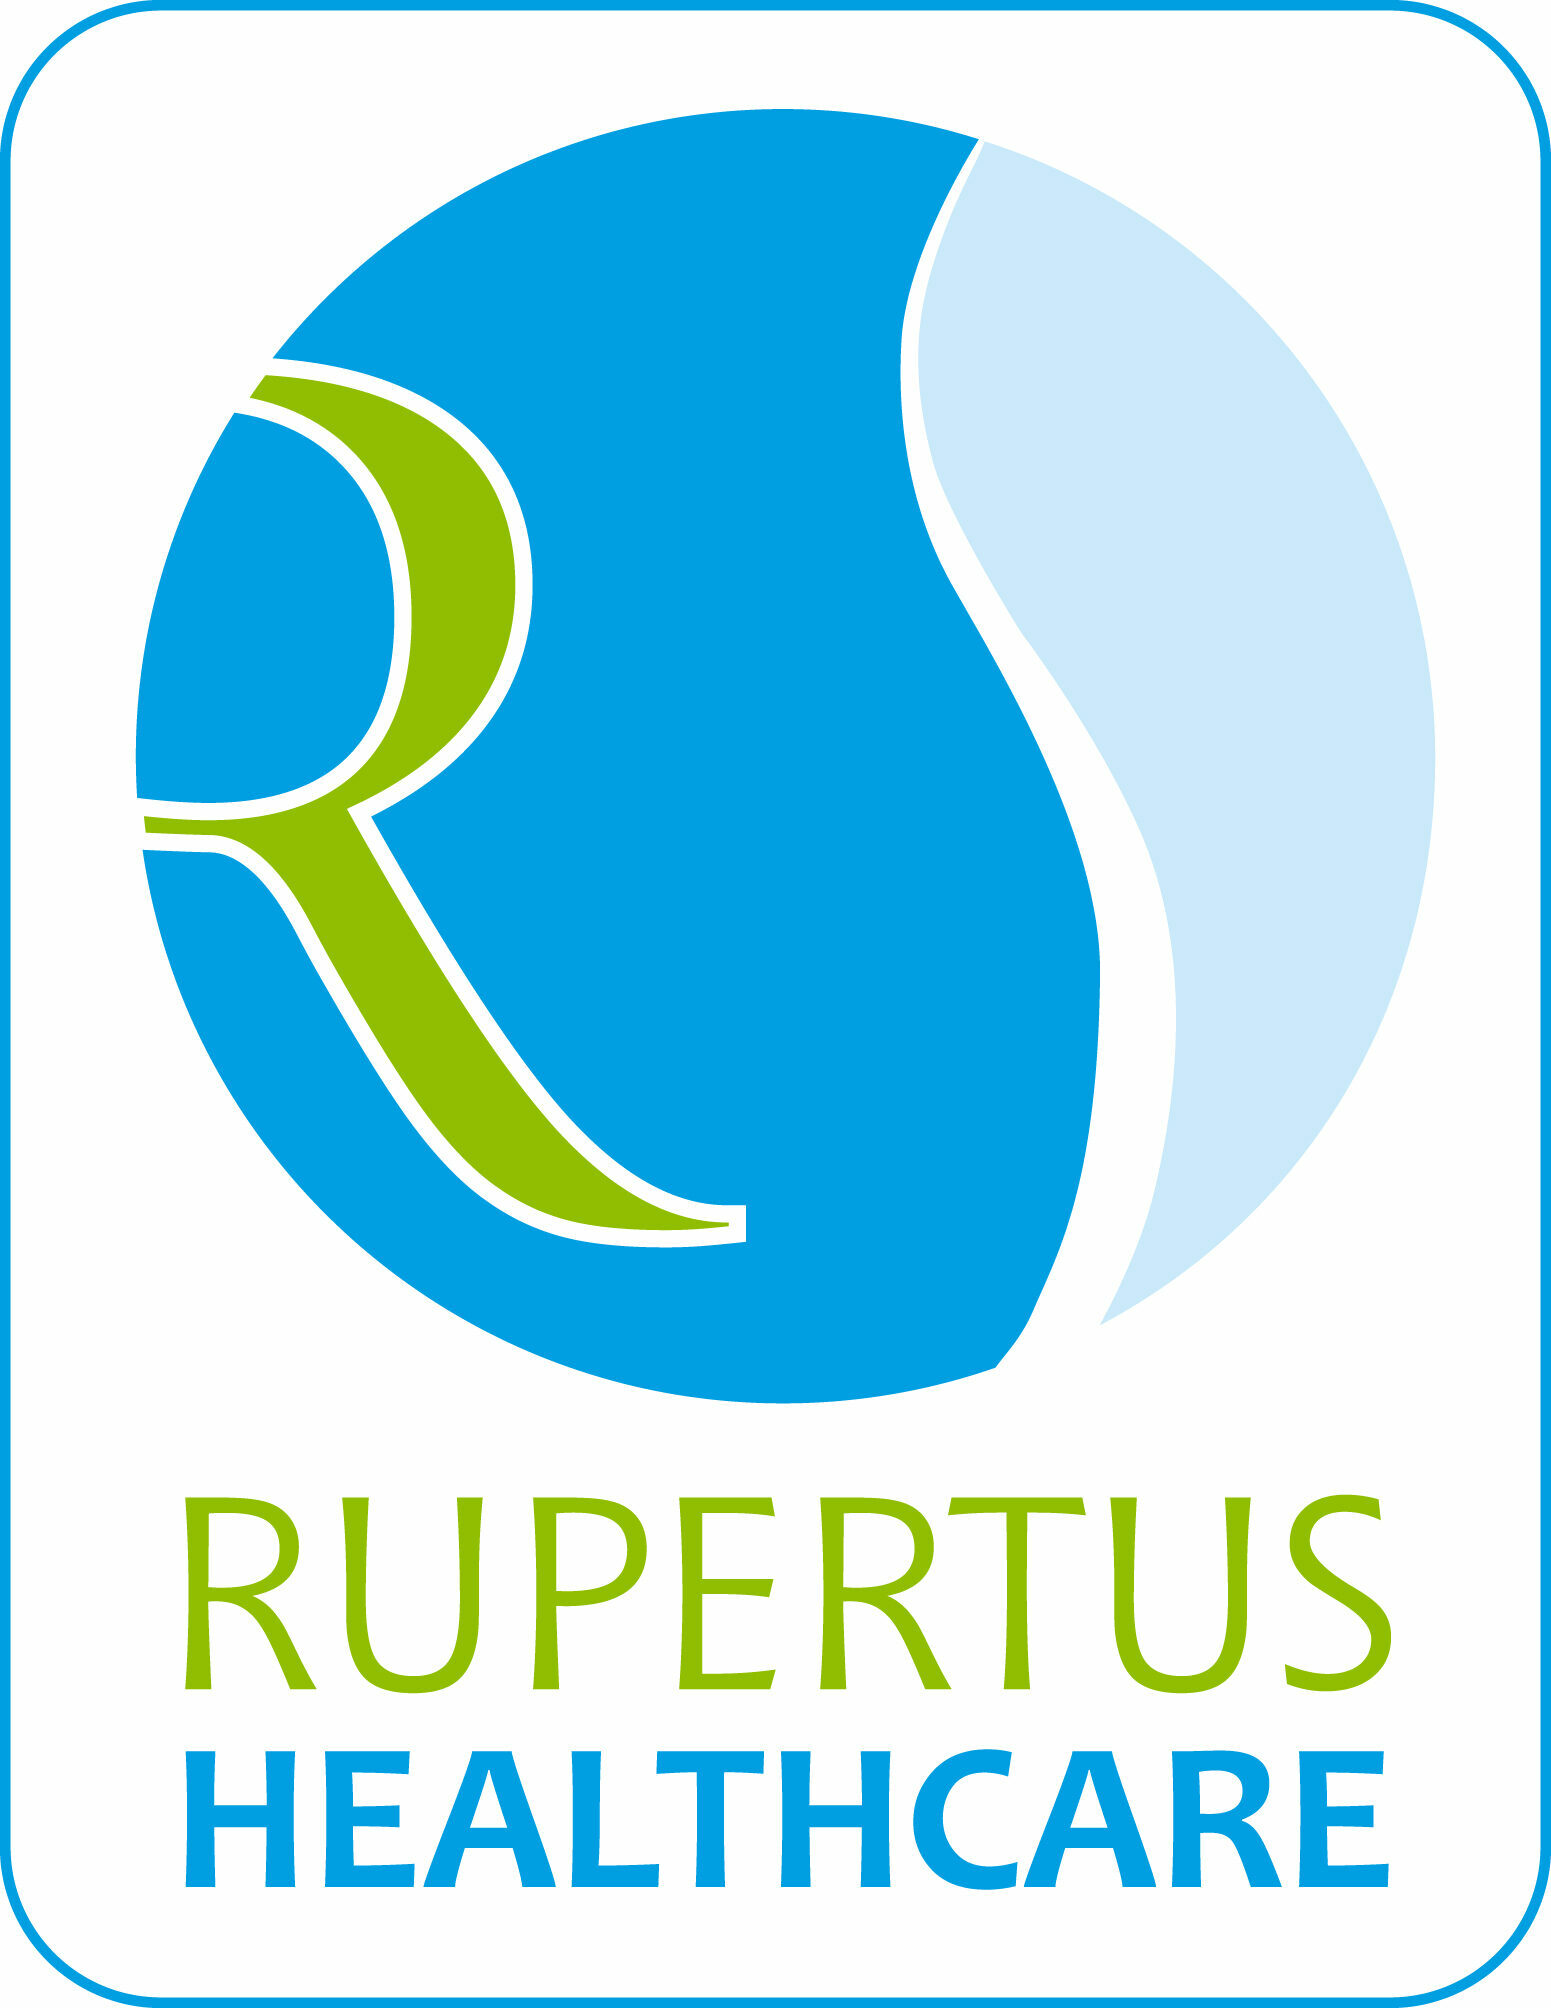 Rupertus Healthcare